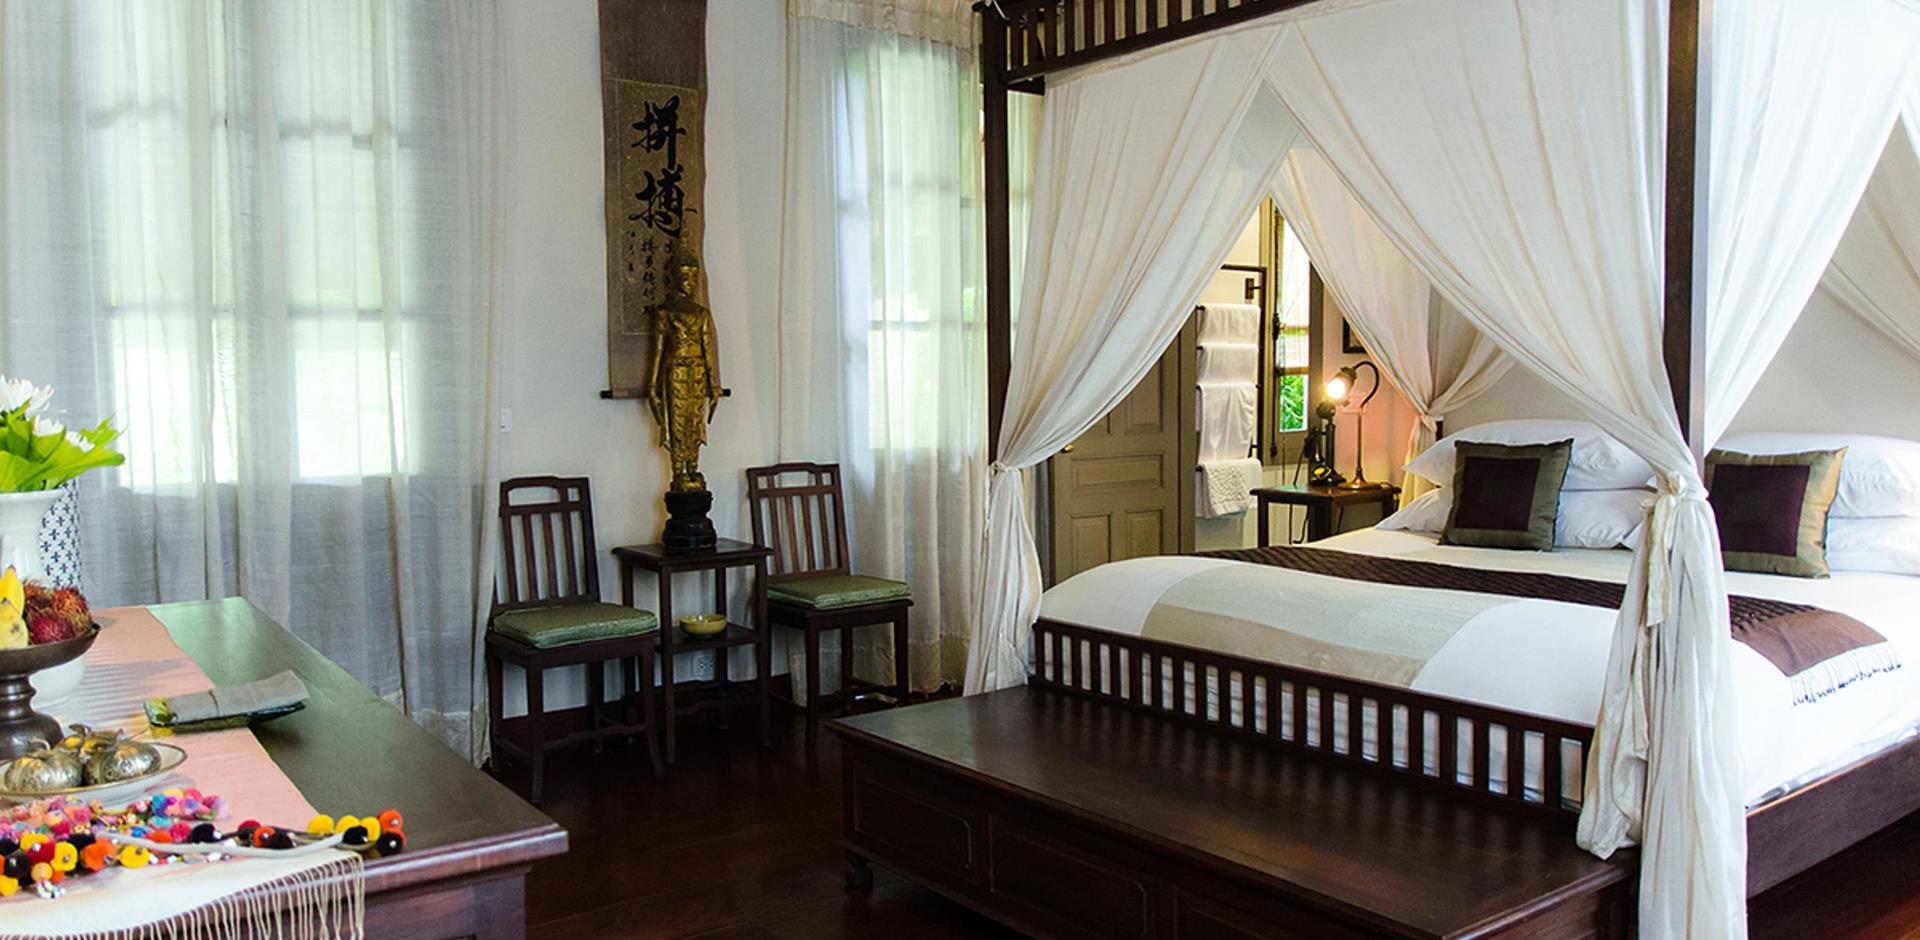 Bedroom, Satri House, Laos